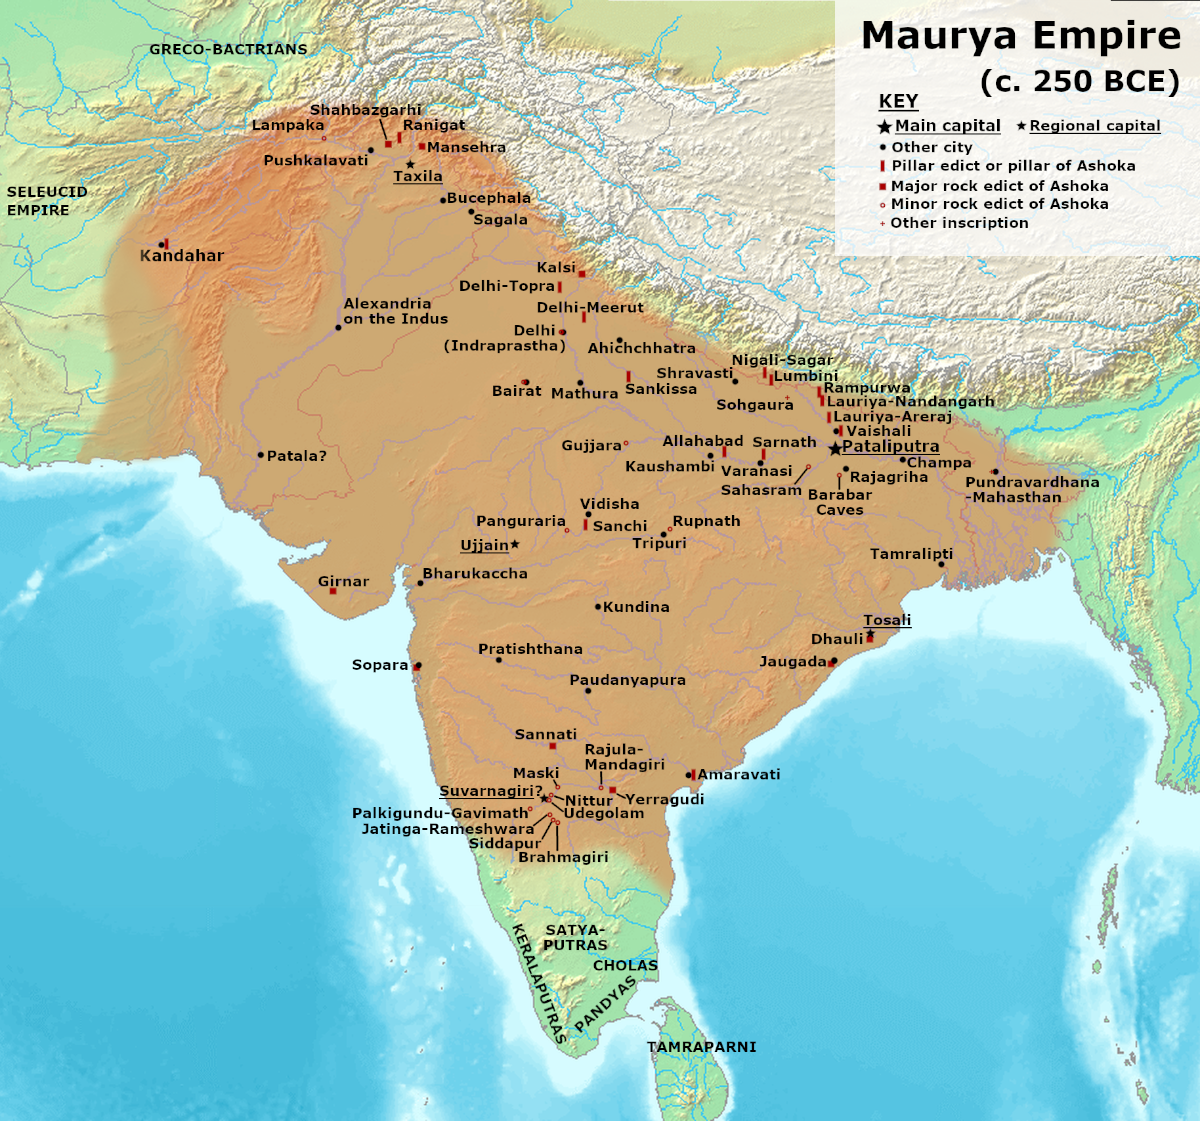 Maurya_Empire,_c.250_BCE_2.png